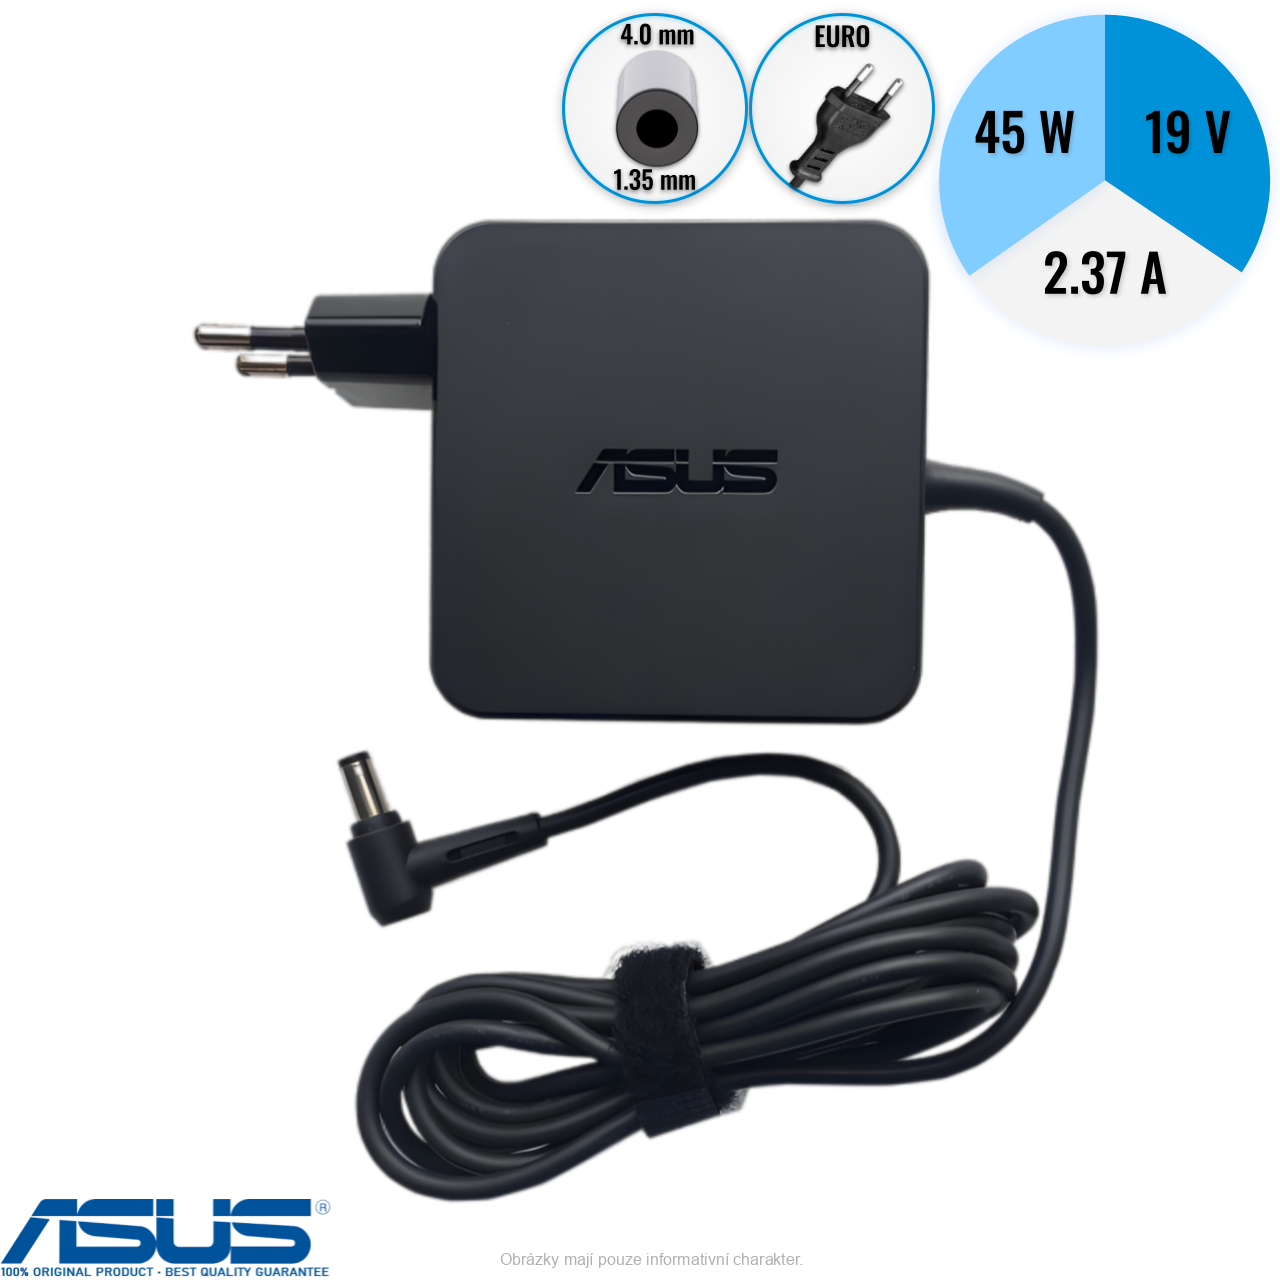 Originální adaptér ASUS AD883020 010H-3LF 2,37 45W (4x1,35mm) - lehce škráblý